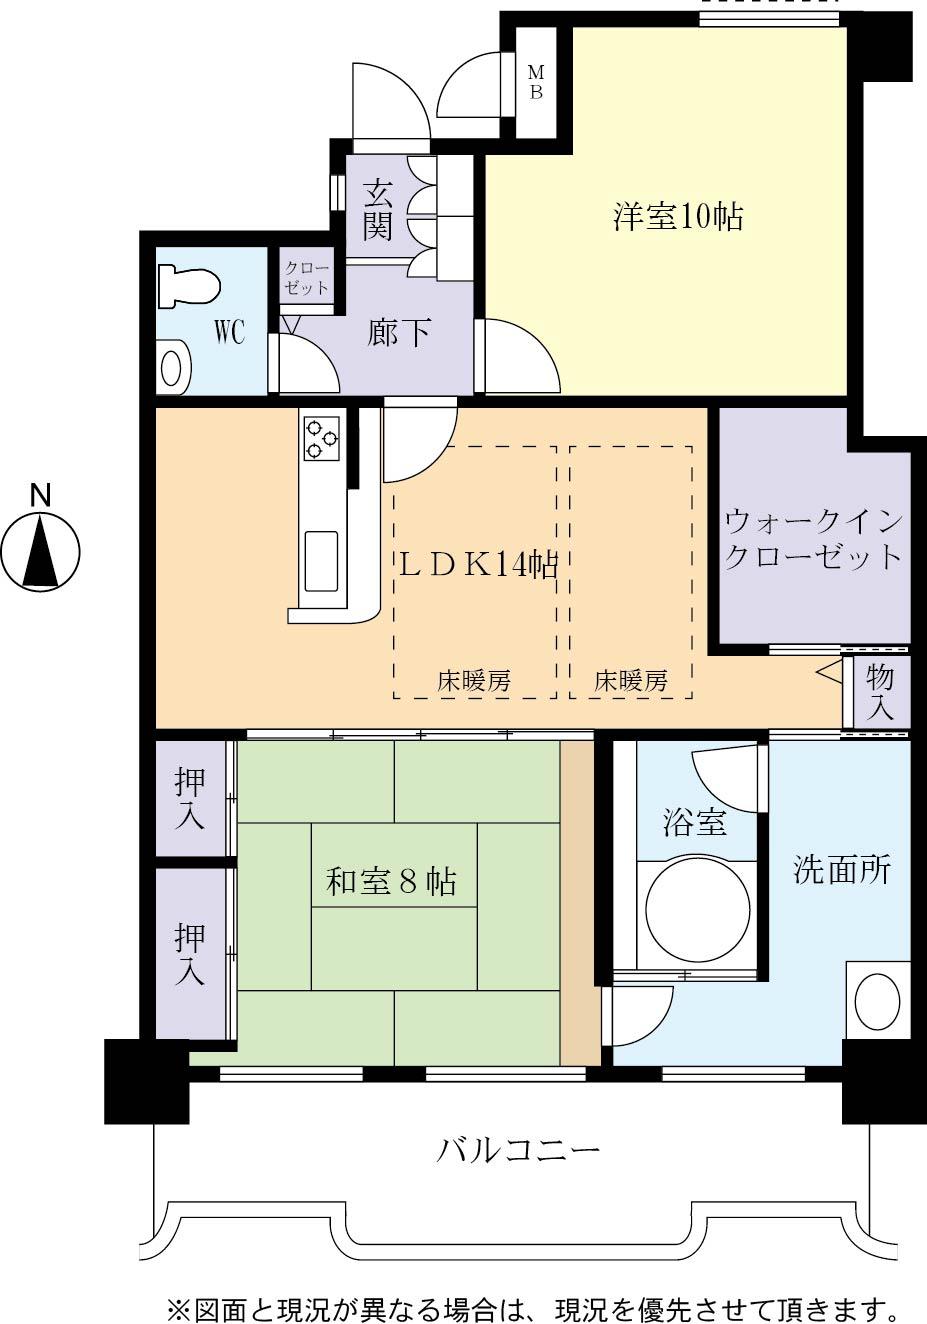 Floor plan. 2LDK, Price 34,800,000 yen, Footprint 88.9 sq m , Balcony area 13.26 sq m